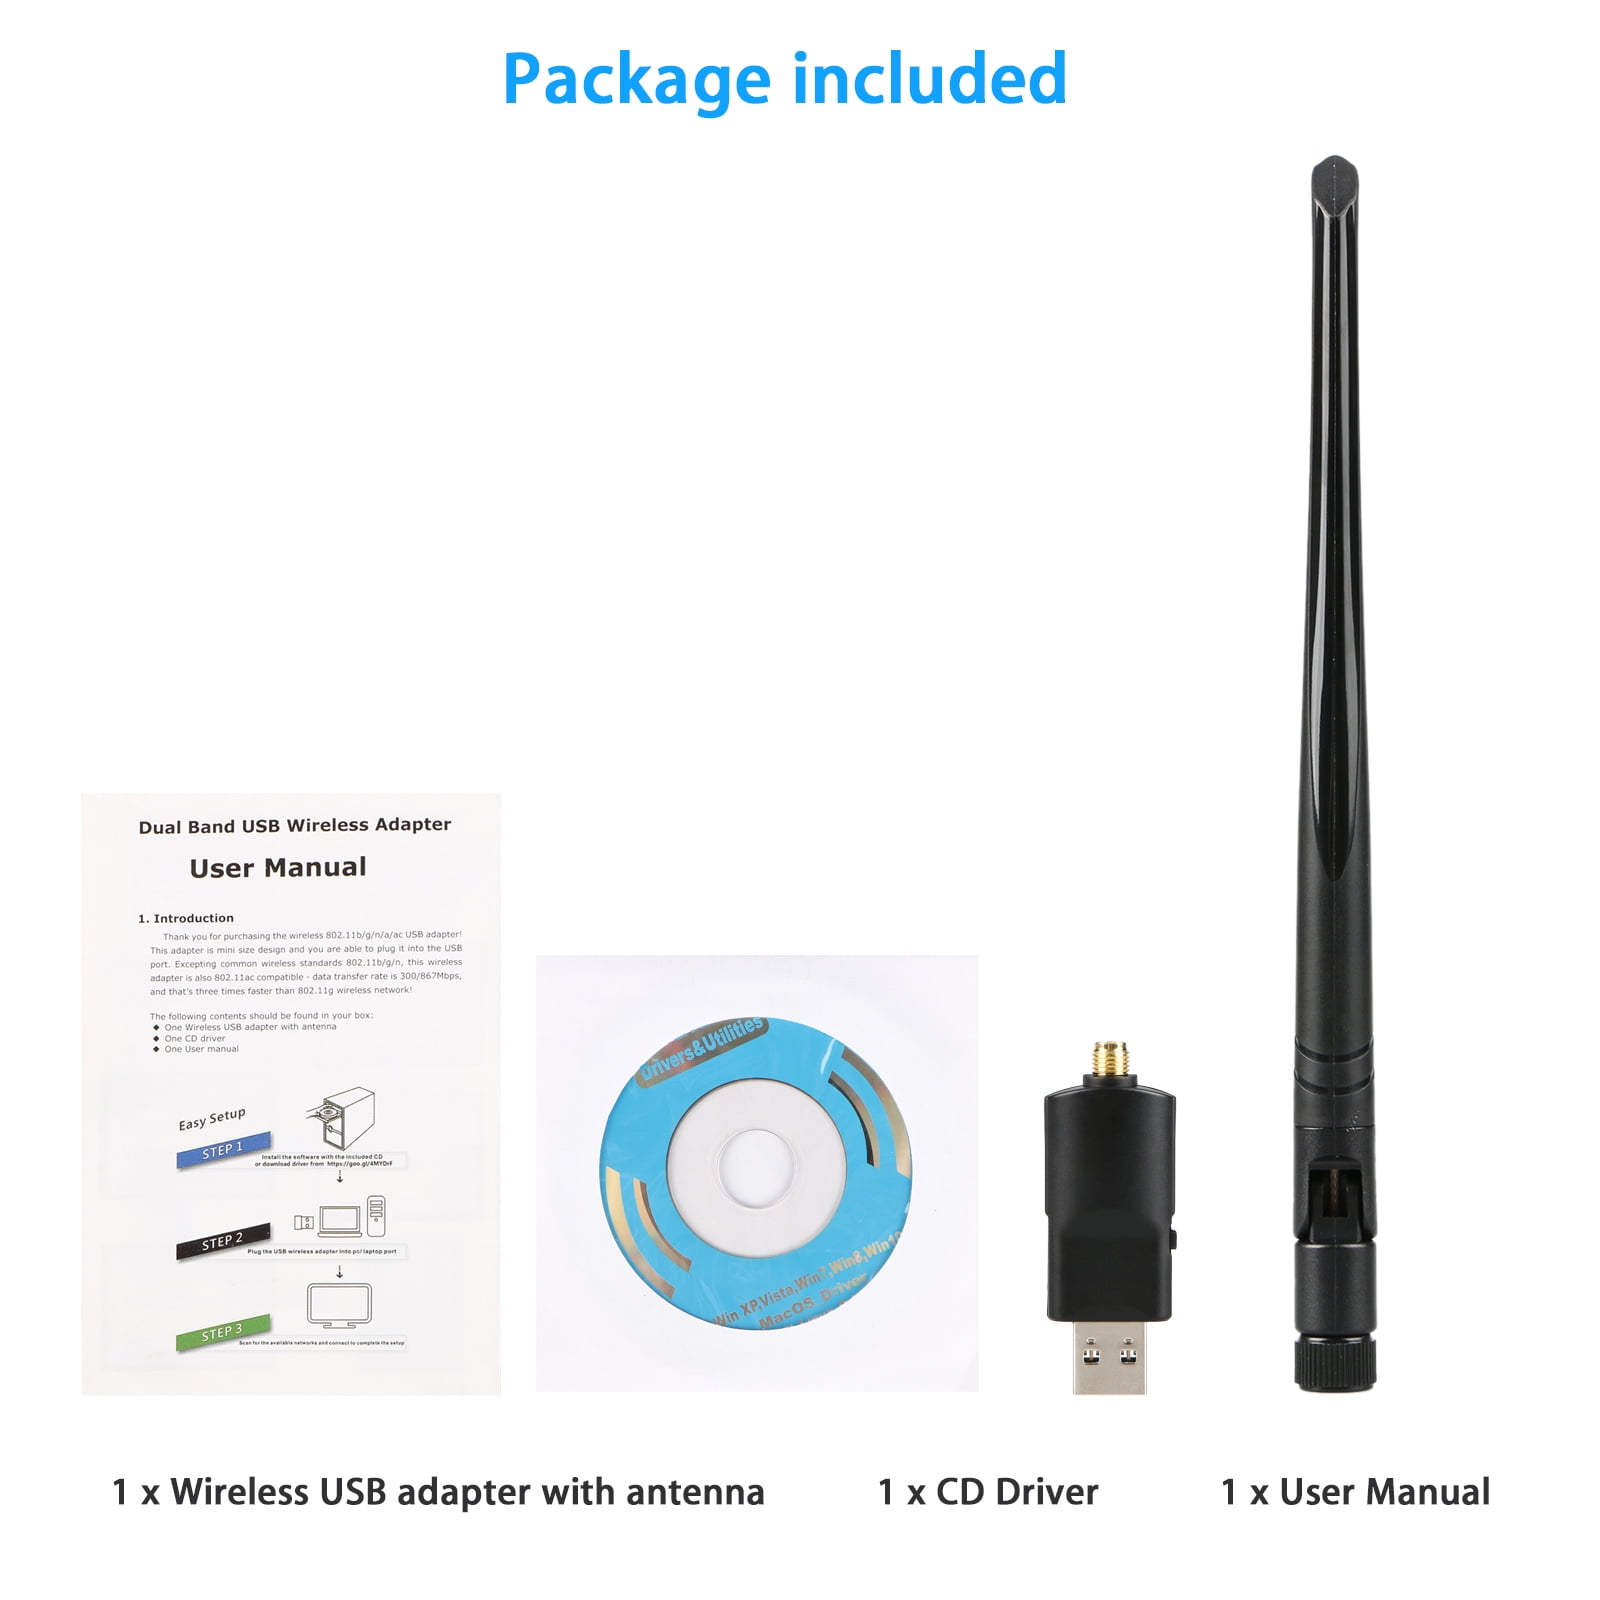 Usb Wifi Adapter Ac10 Usb 3 0 Dual Band 2 4g 5g Mini 802 11ac Wireless Network Adapter Wi Fi Dongle With 5dbi Antenna For Laptop Destop Windows Xp Vista 7 8 10 Mac Os X 10 4 10 14 1 Walmart Com Walmart Com